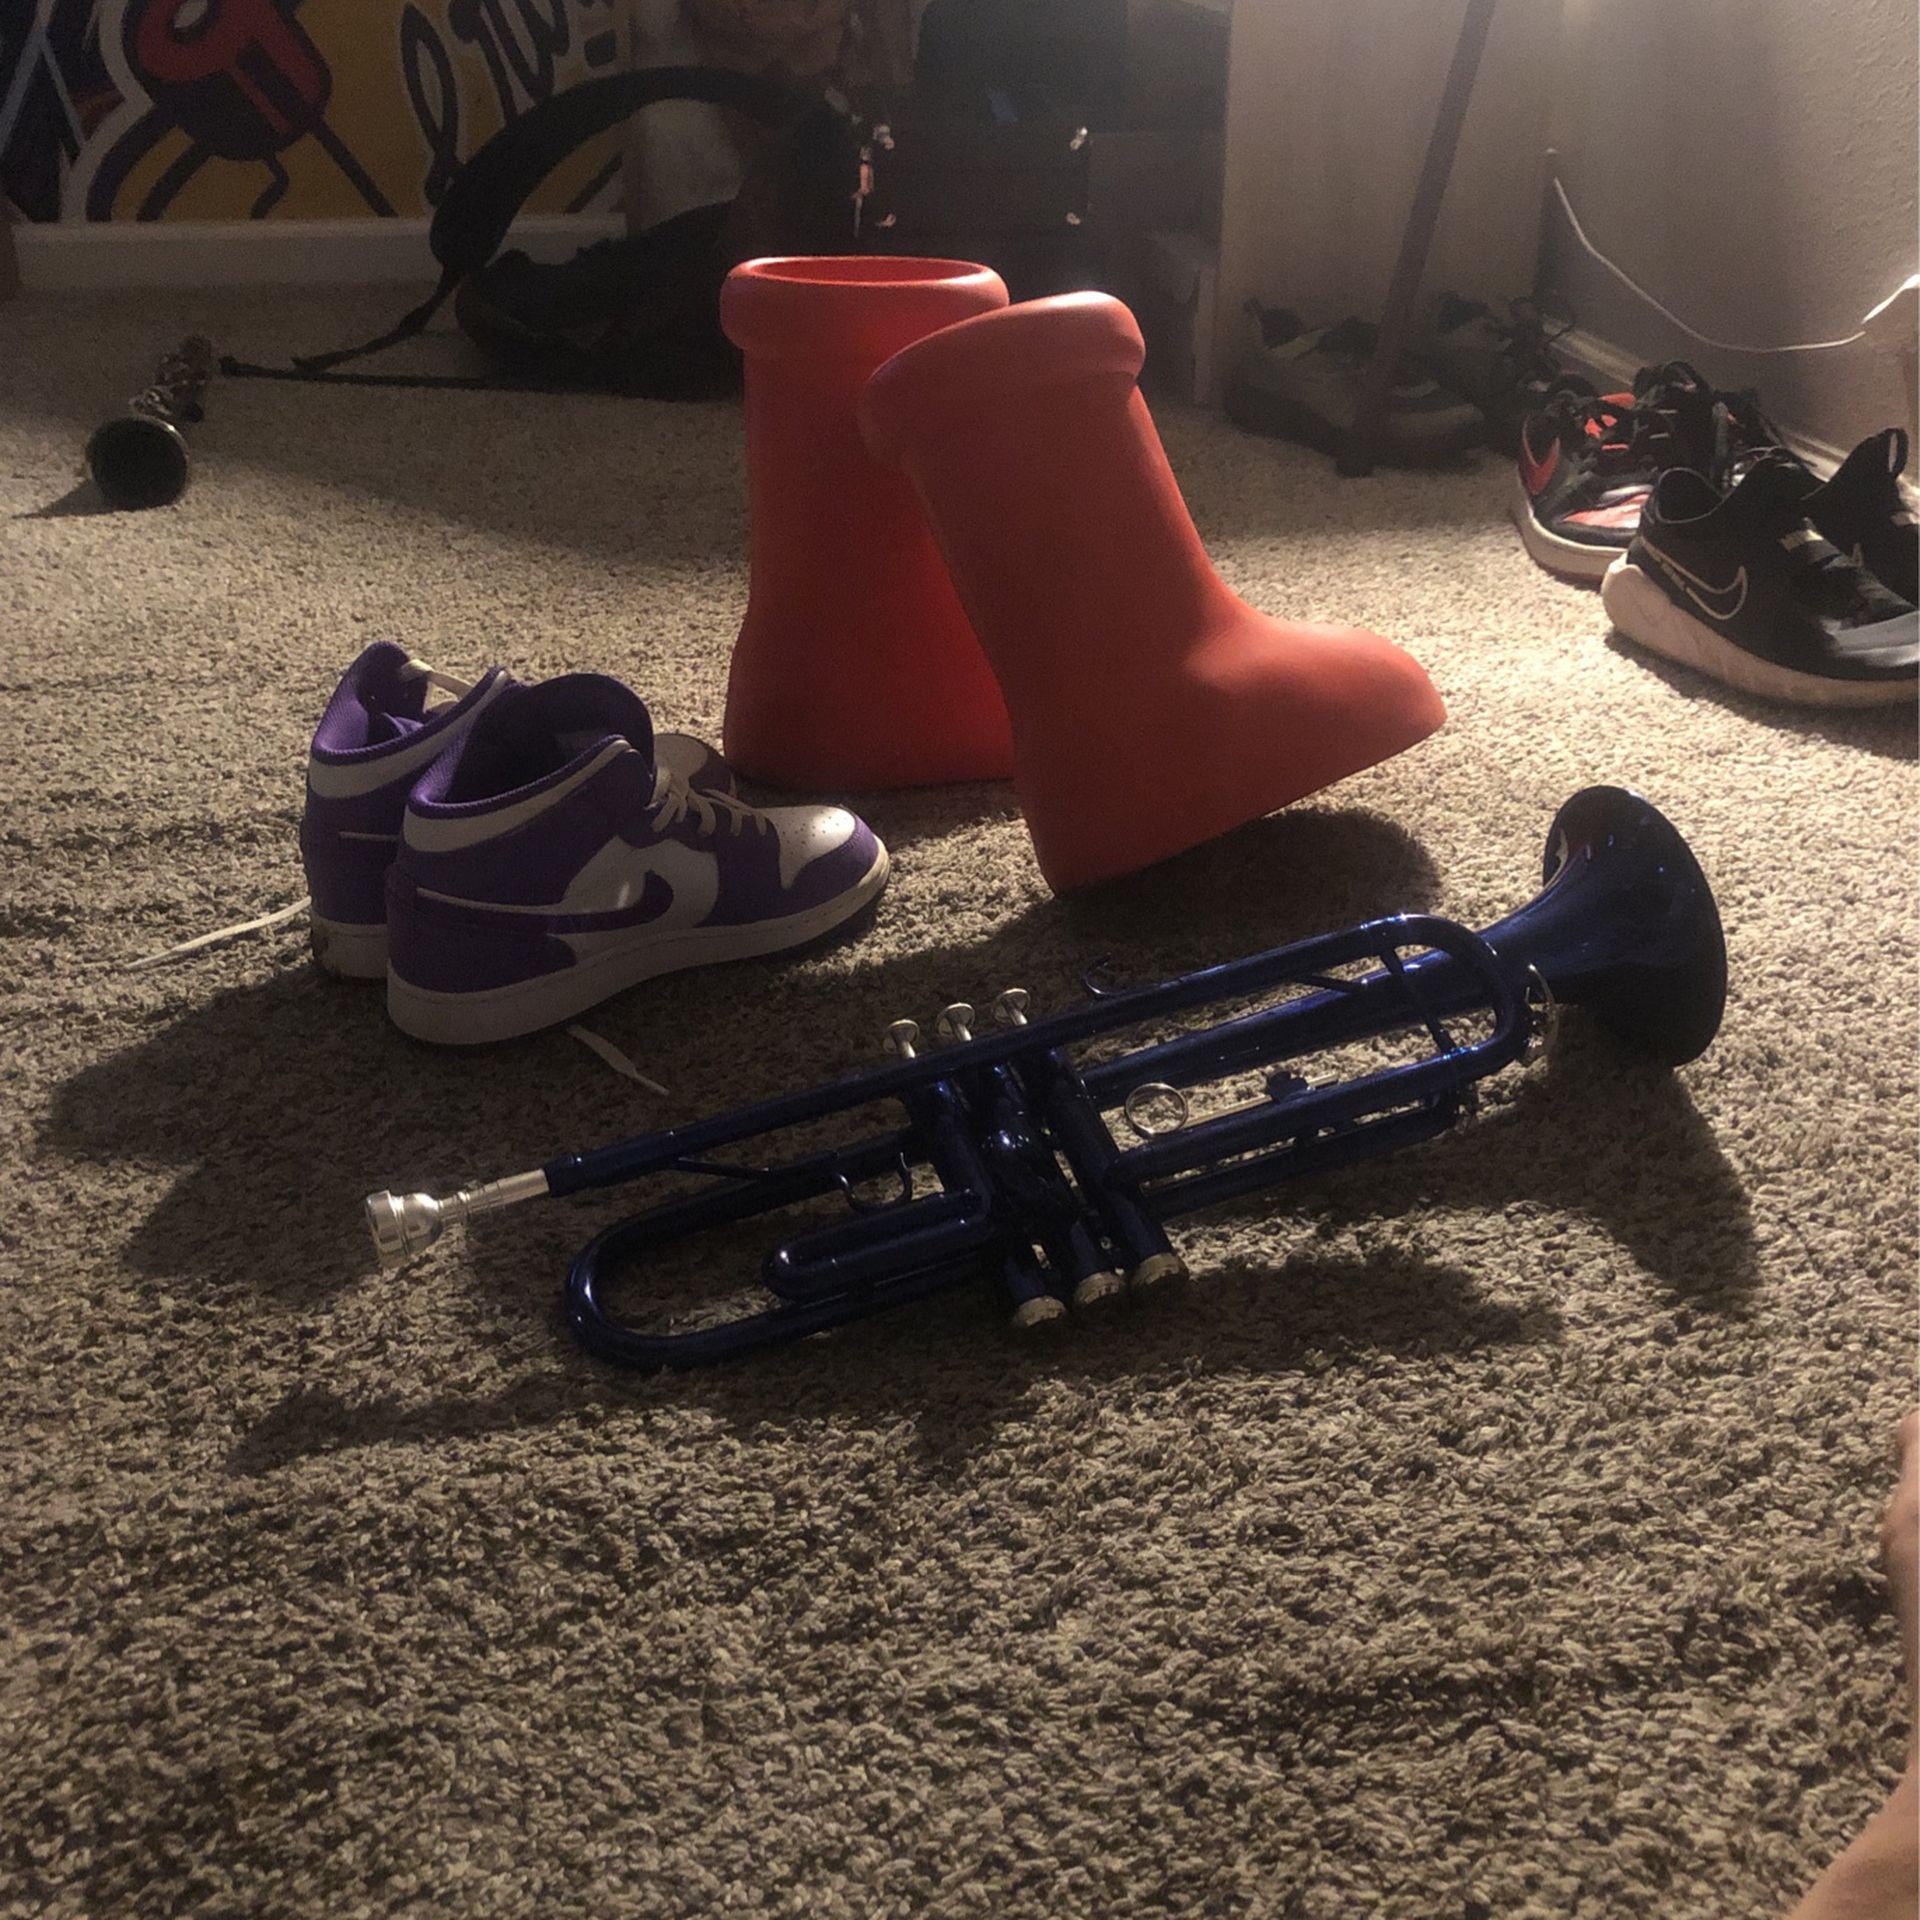 jordan 1 purple uncreased size 6.5 big red boots fits everyone blue trumpet (not plastic